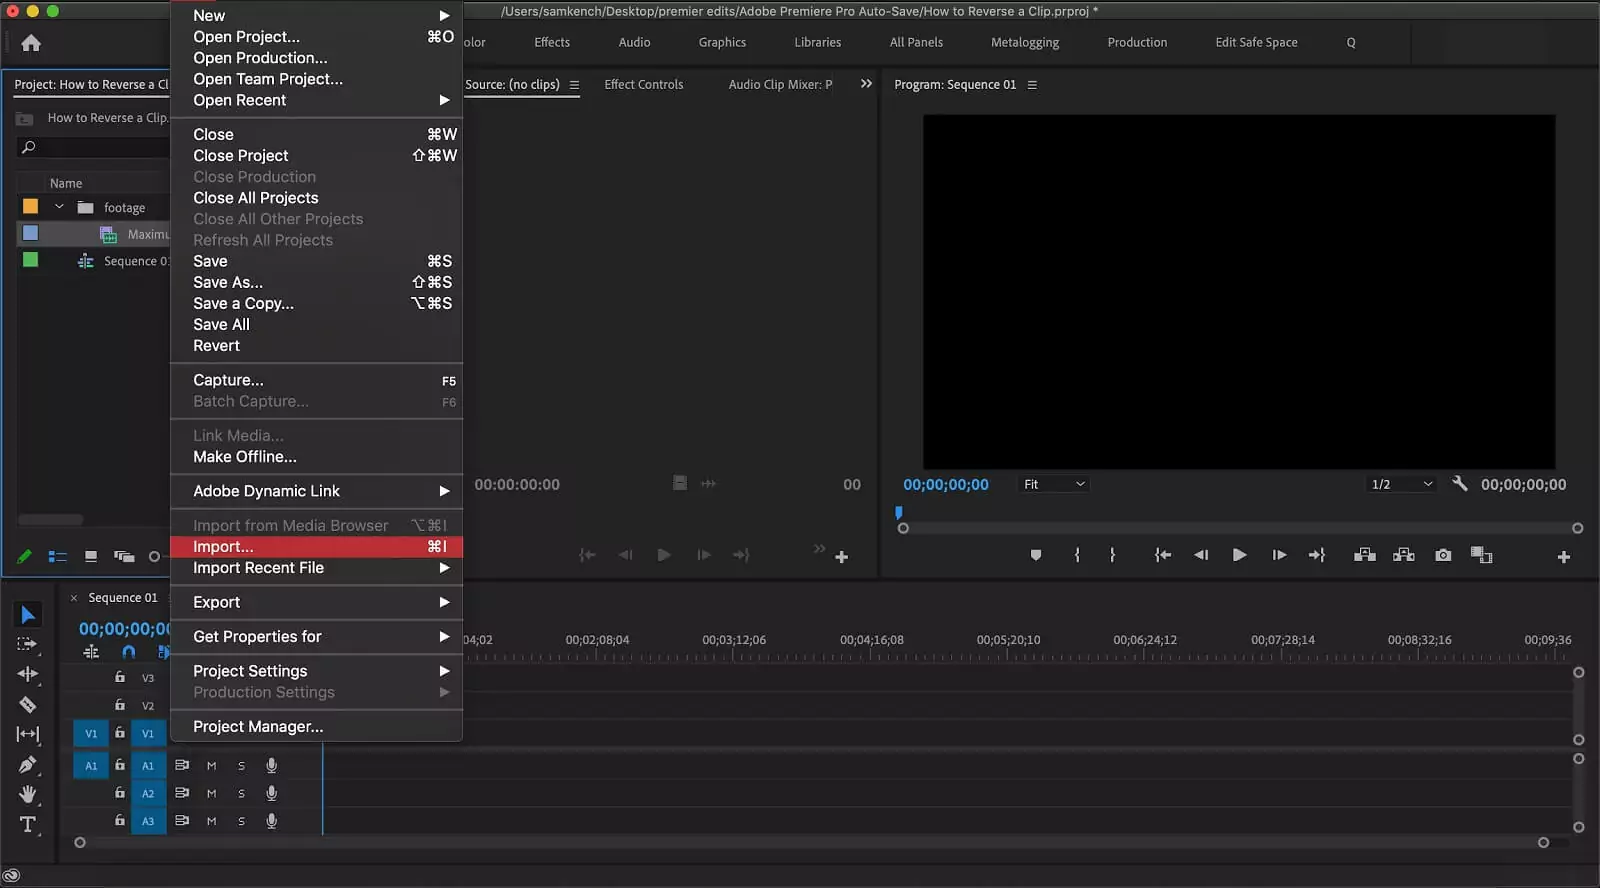 How To Reverse a Clip im Premiere Pro - Reverse Video in Premiere